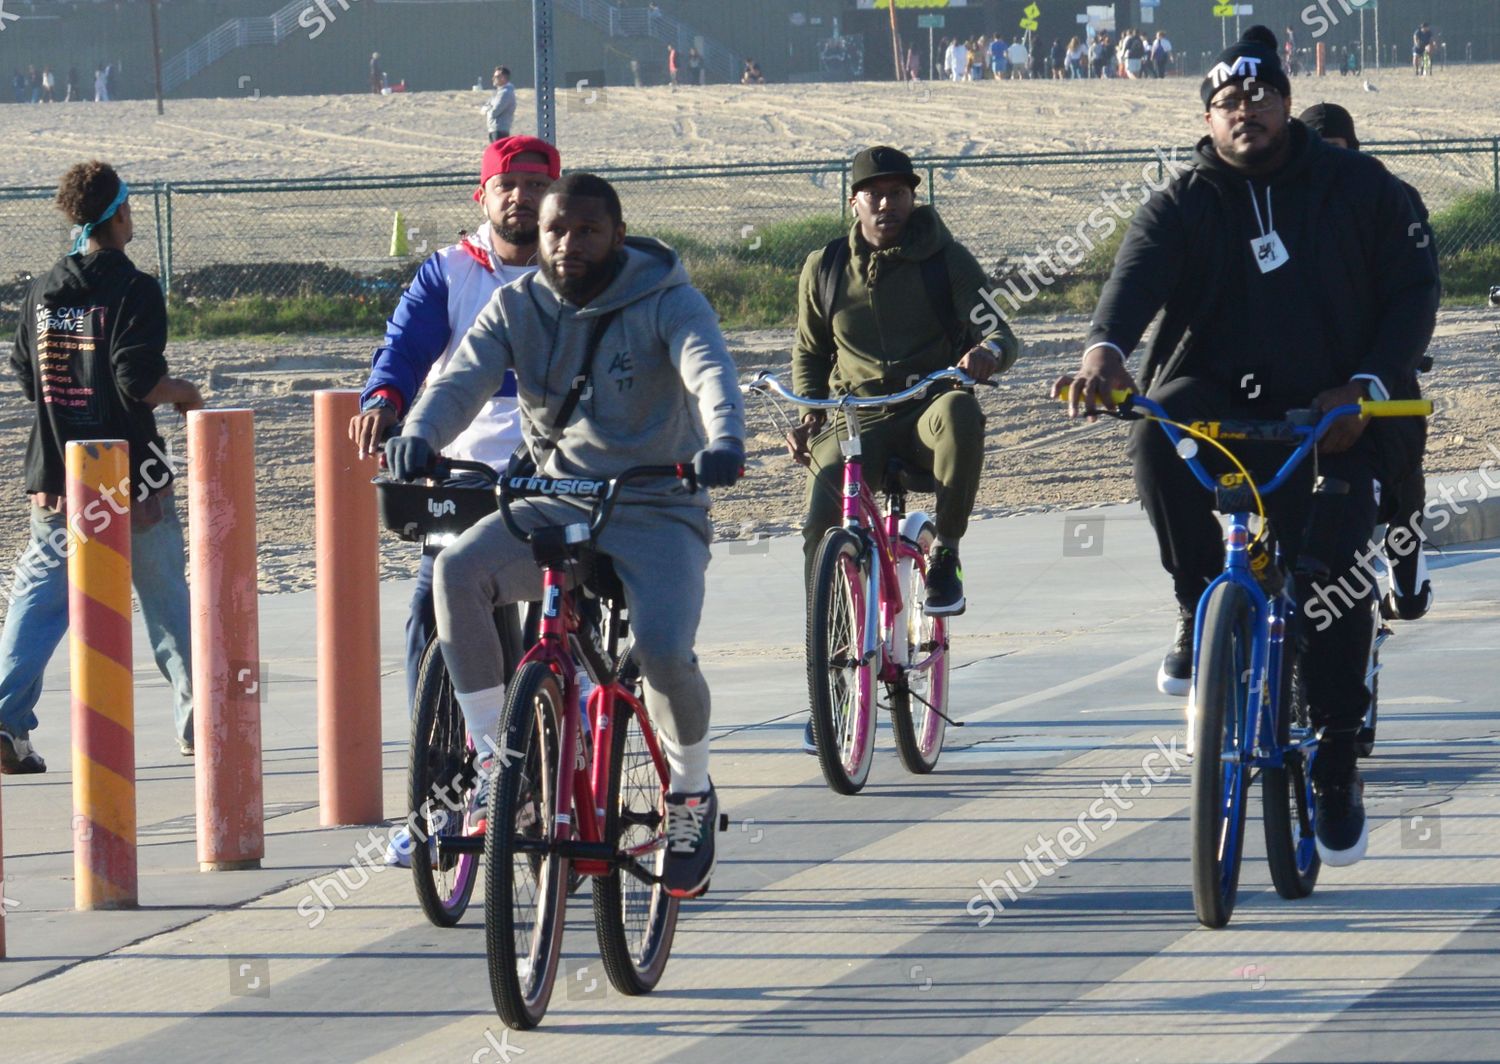 Floyd Mayweather spotted on bike ride along beach in LA as 44-year